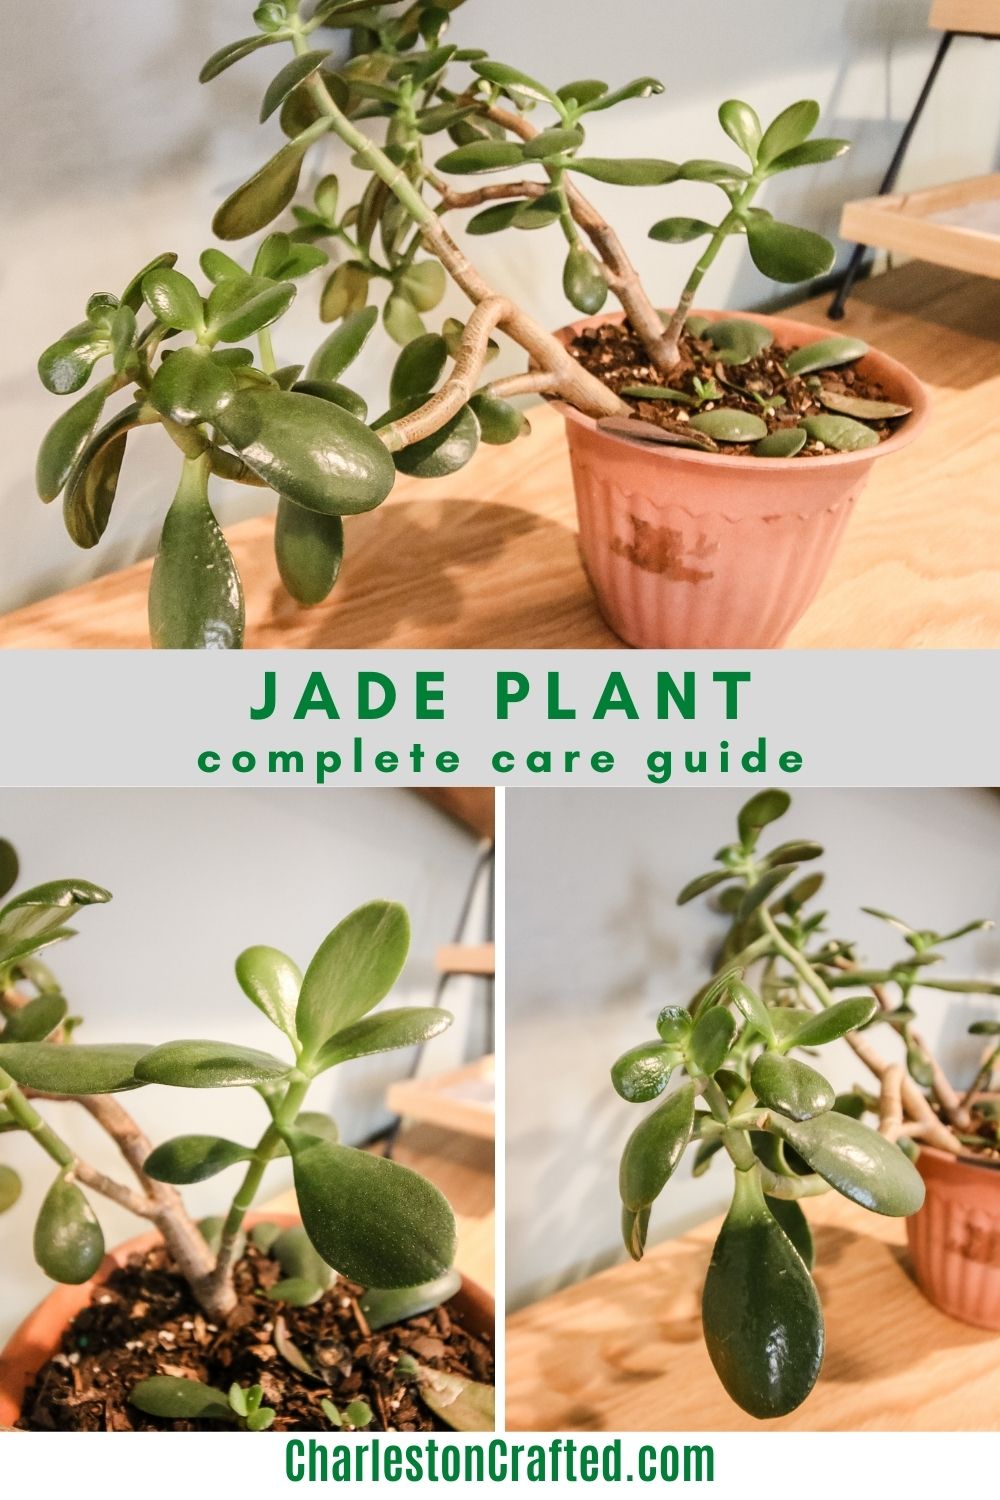 Jade plant care guide